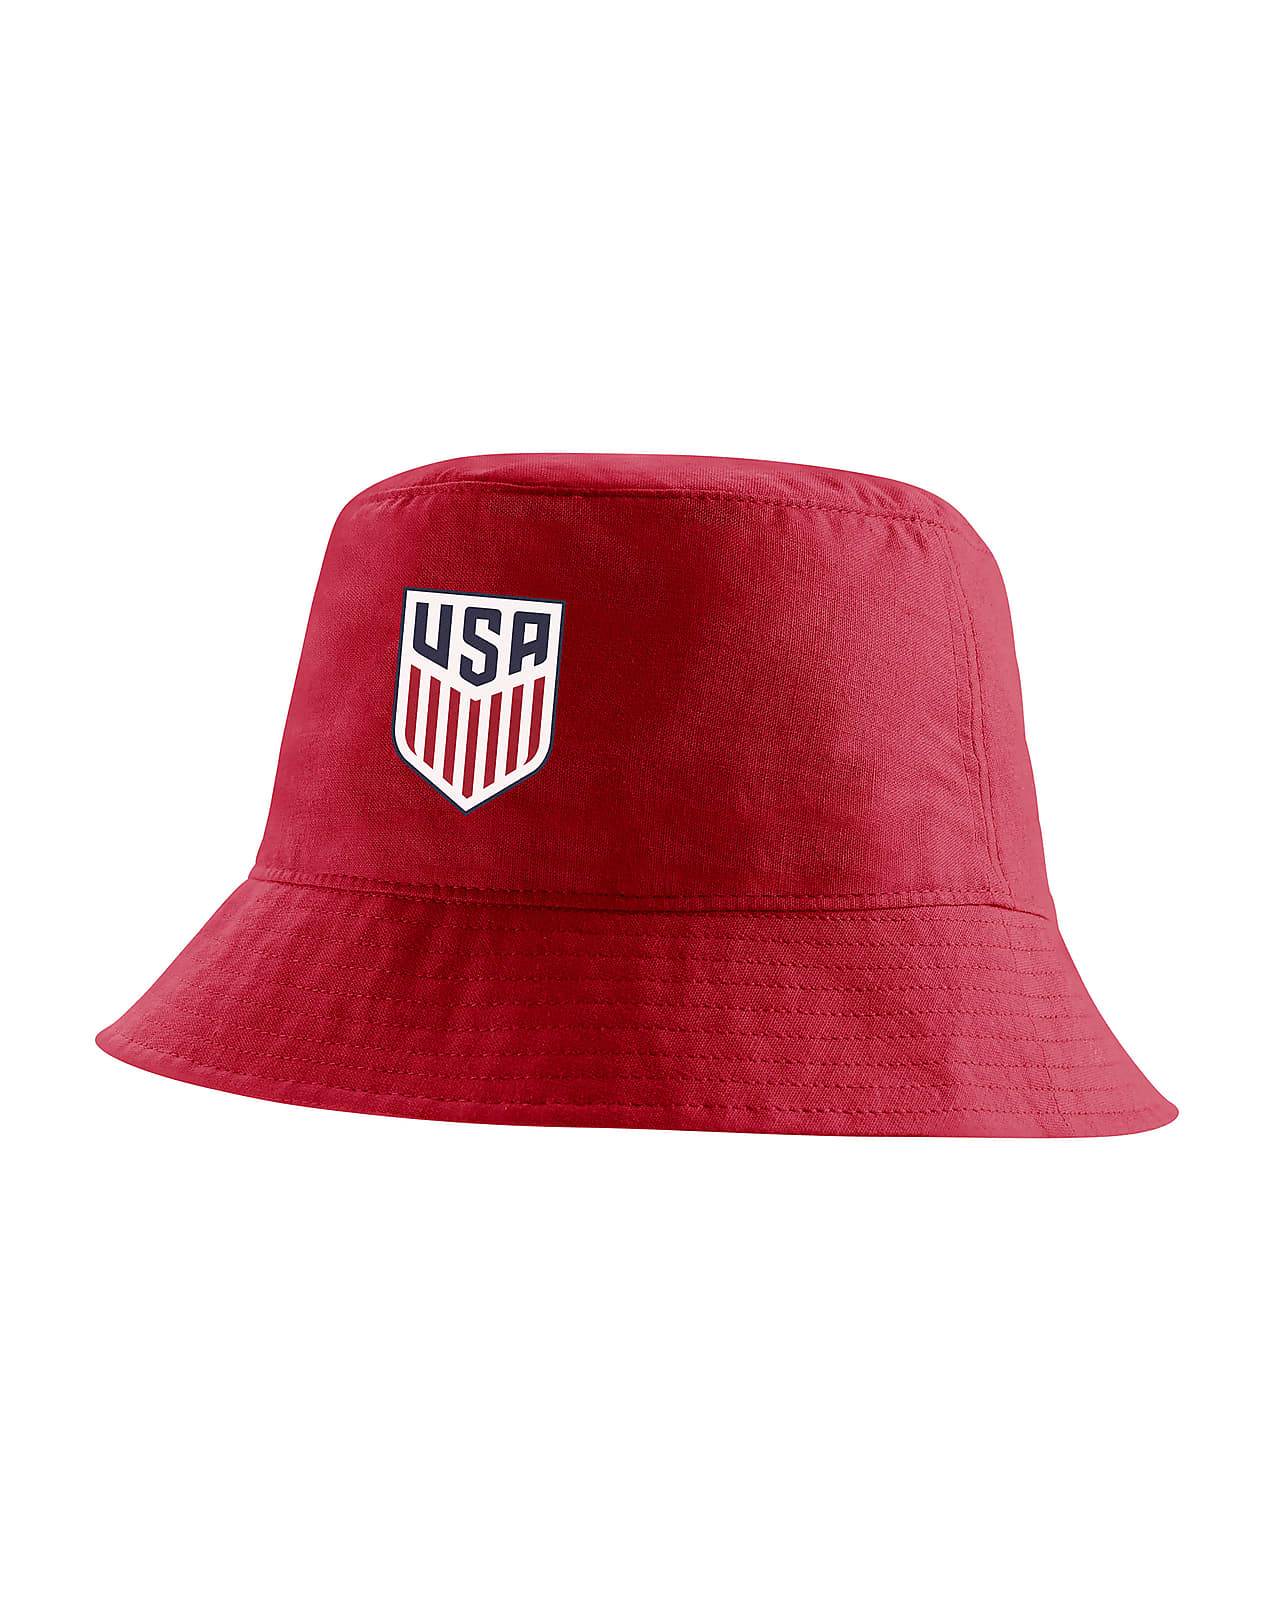 Nike Red USMNT Core Bucket Hat